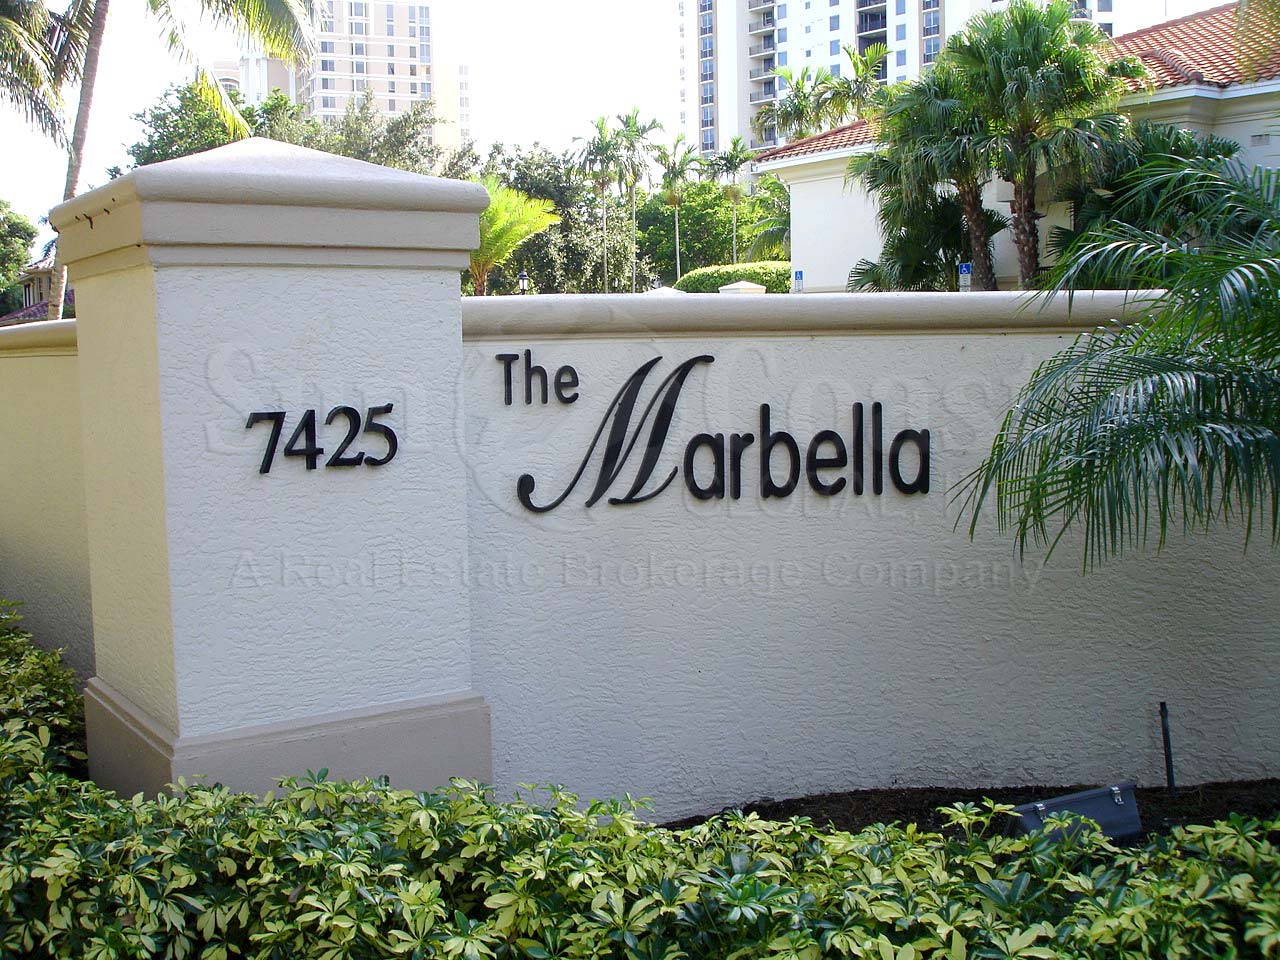 Marbella Signage